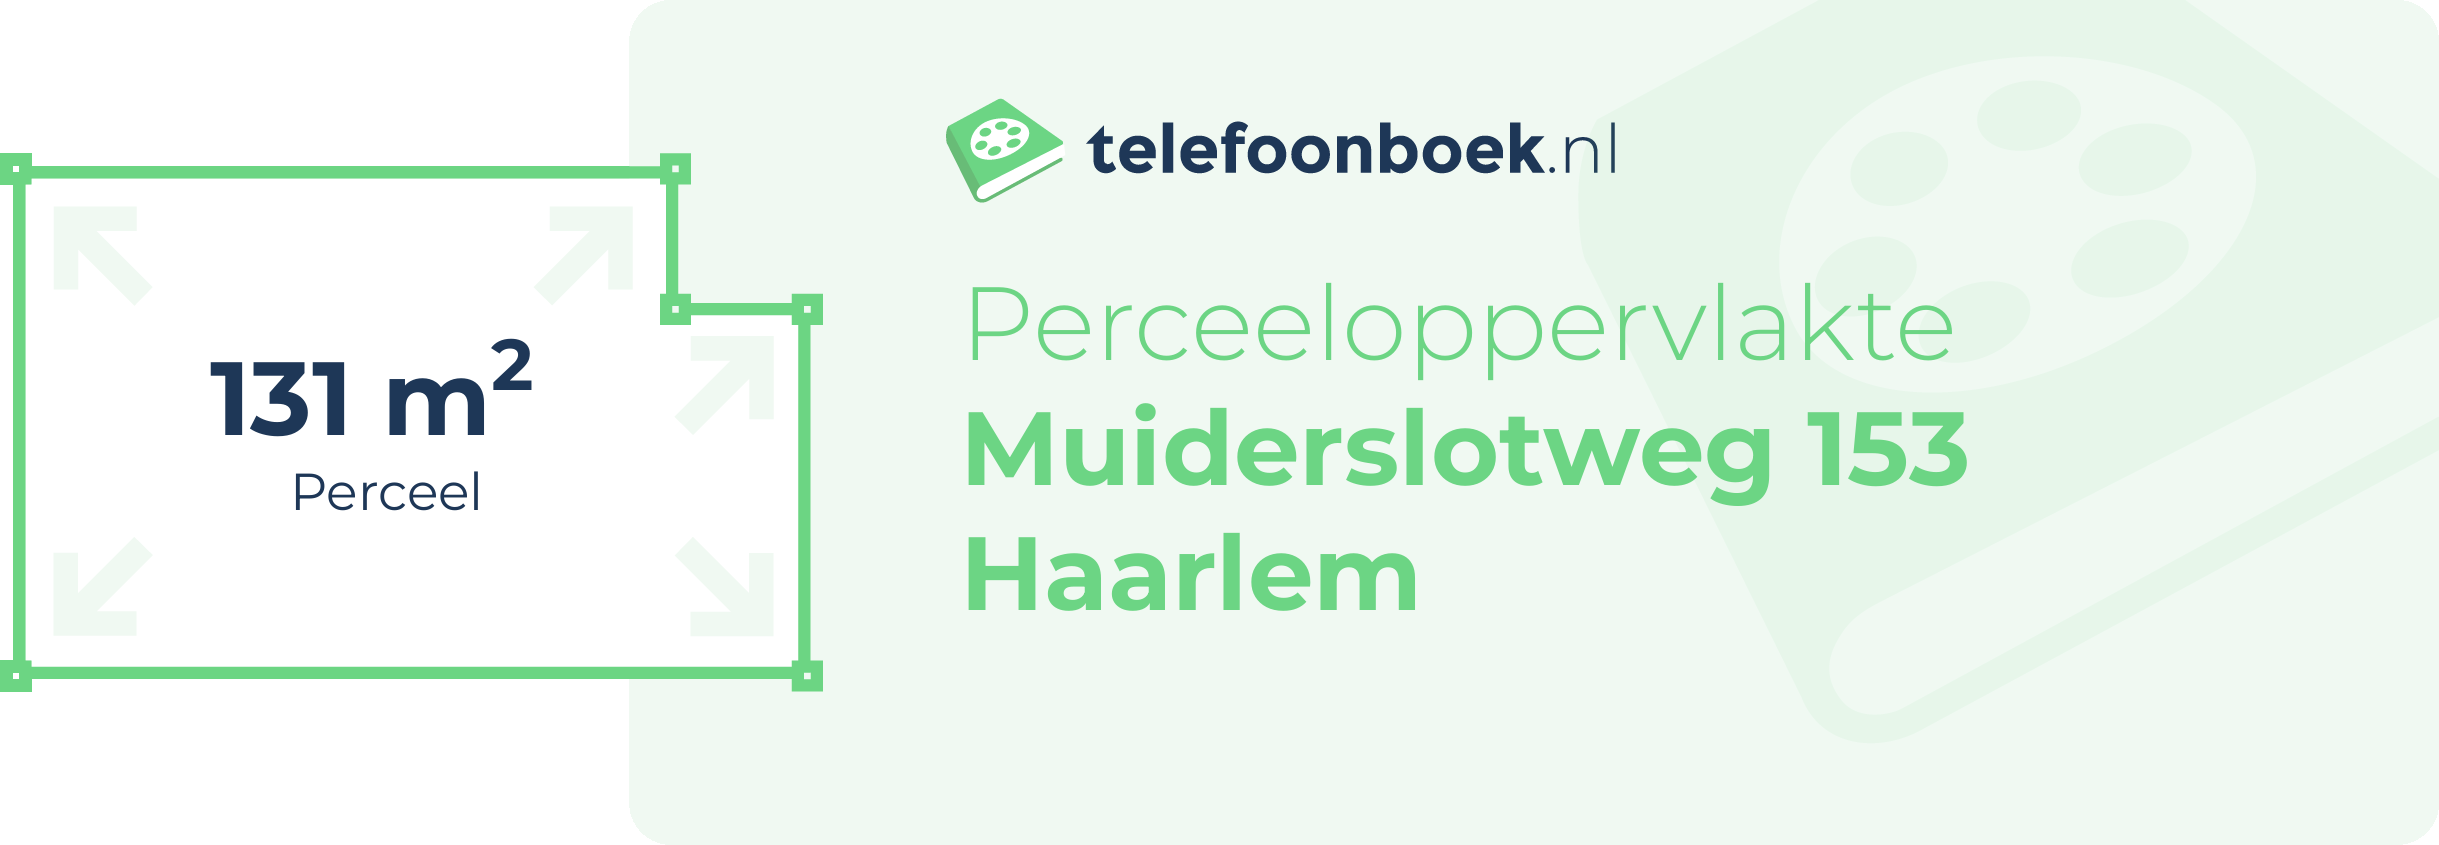 Perceeloppervlakte Muiderslotweg 153 Haarlem